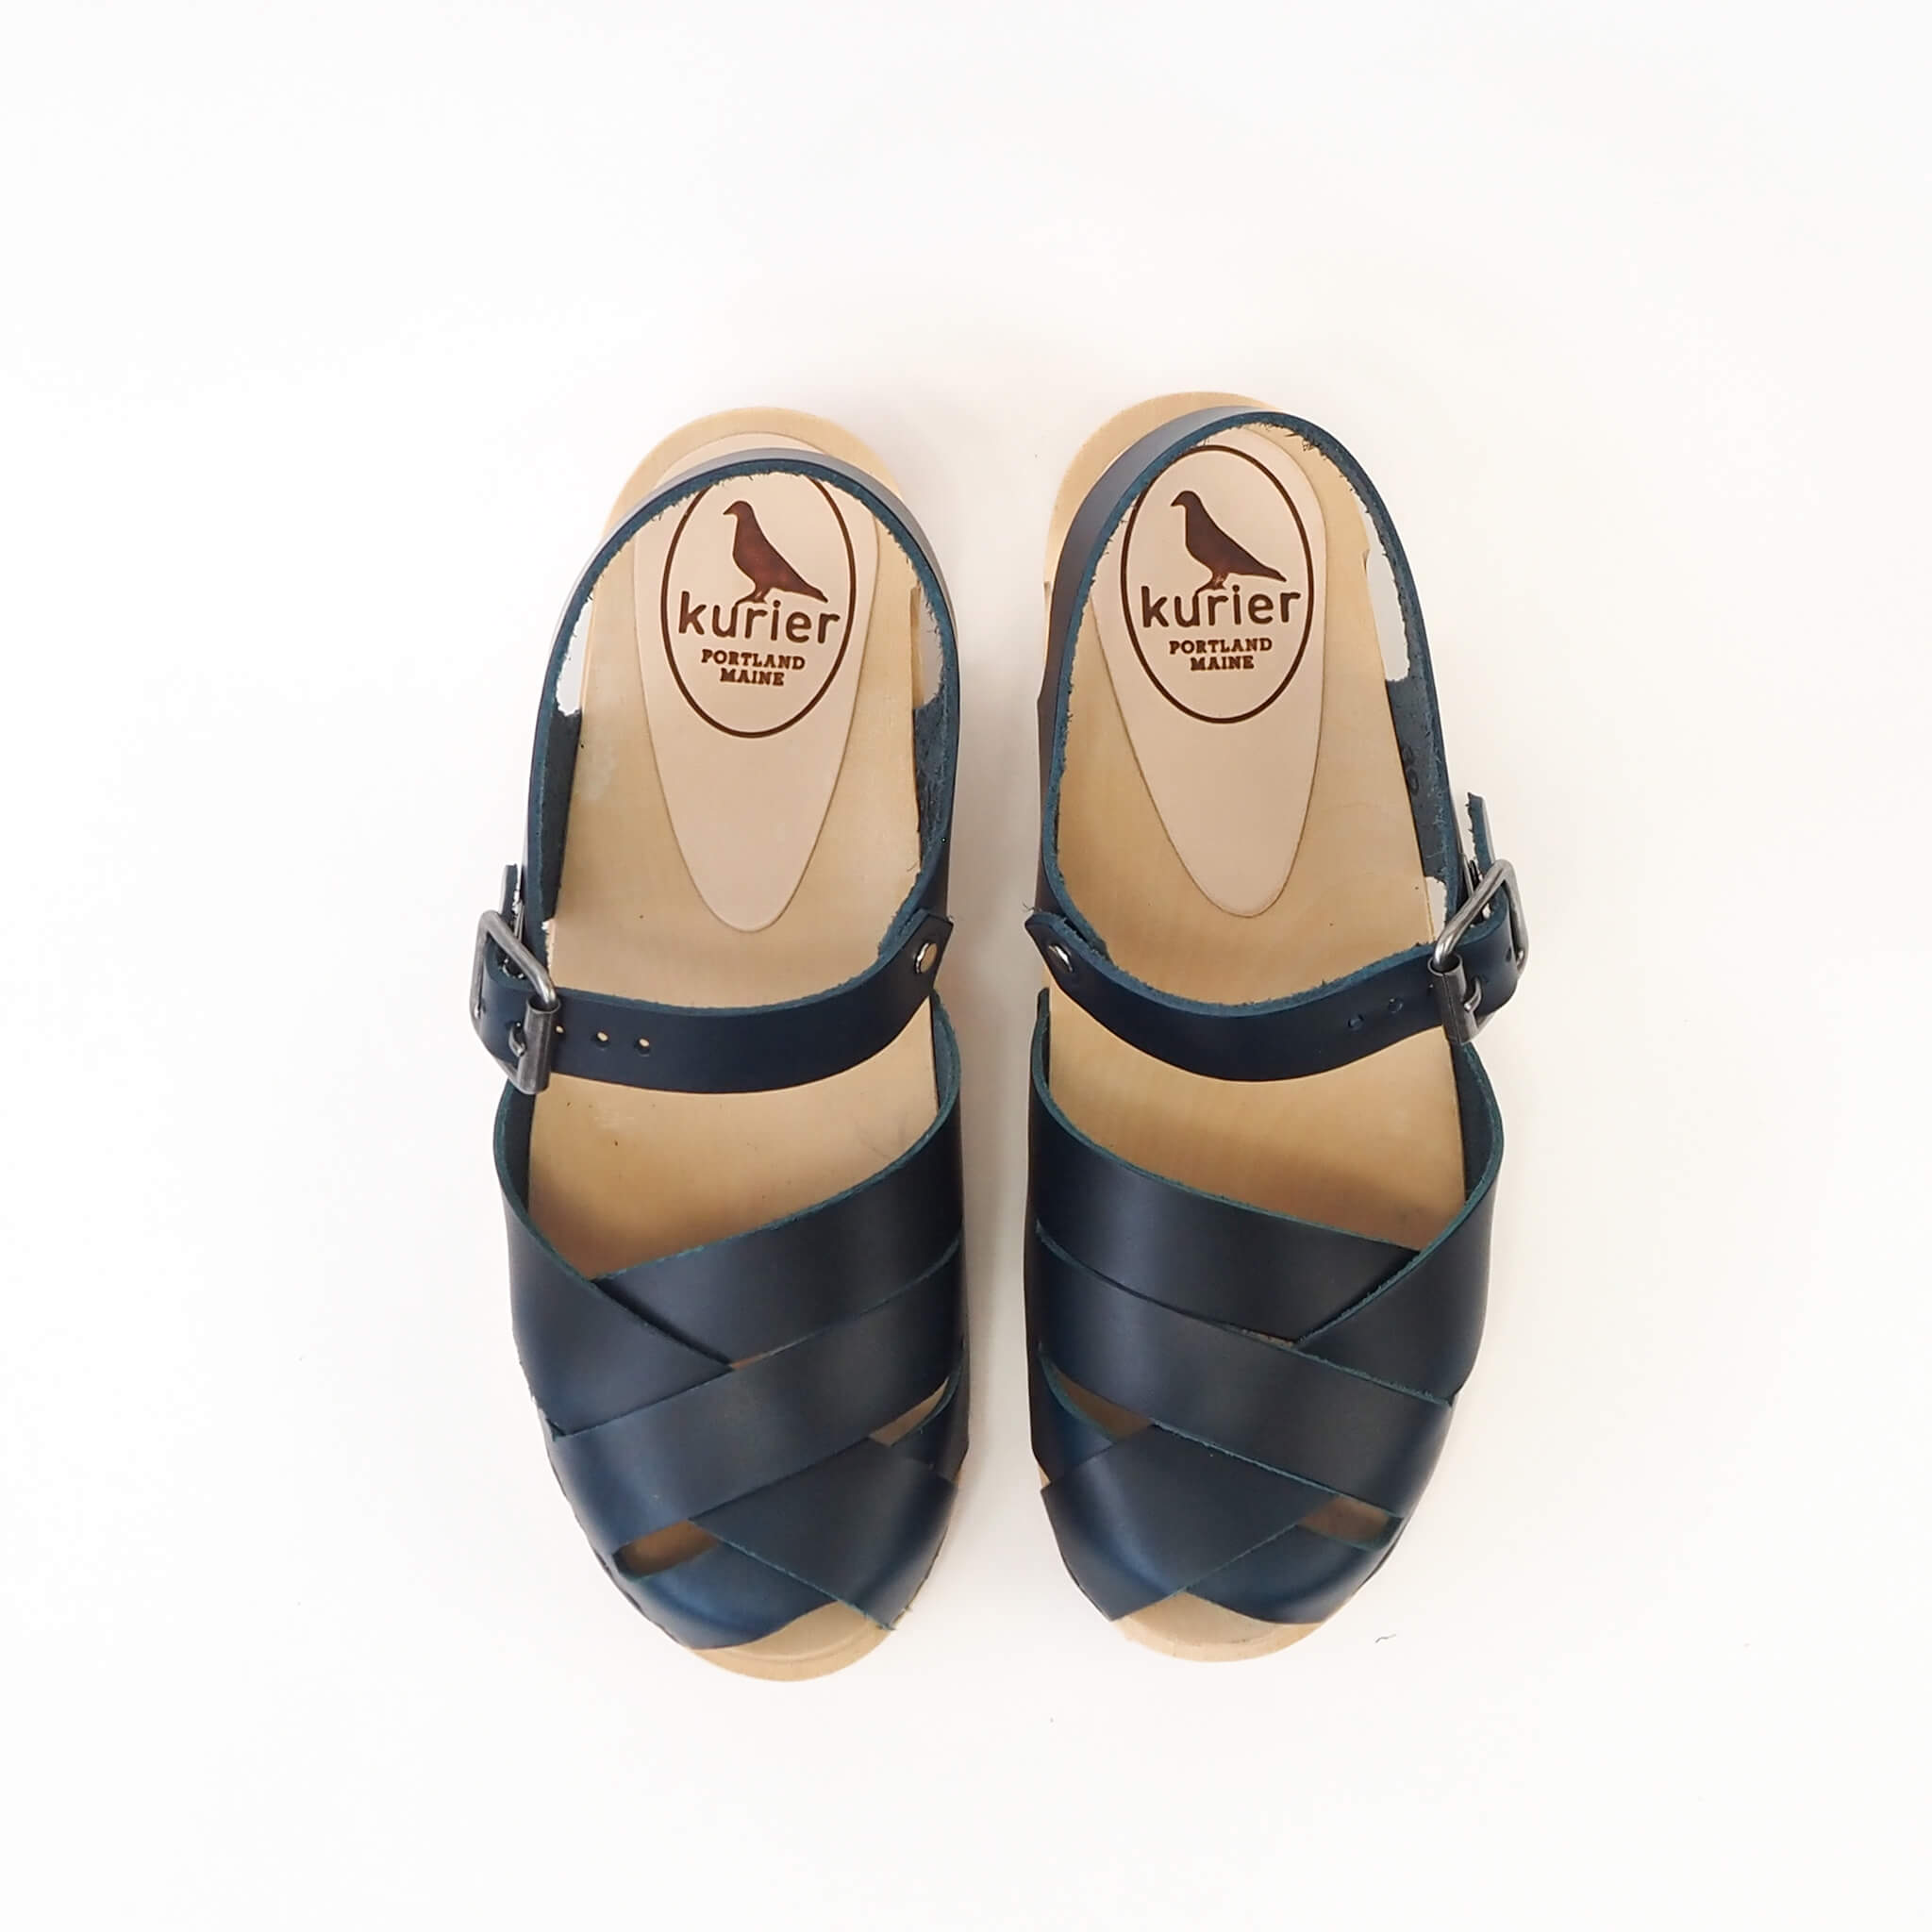 emelia clog low heel peep toe mary janesandal handmade american leather wood - denim top view